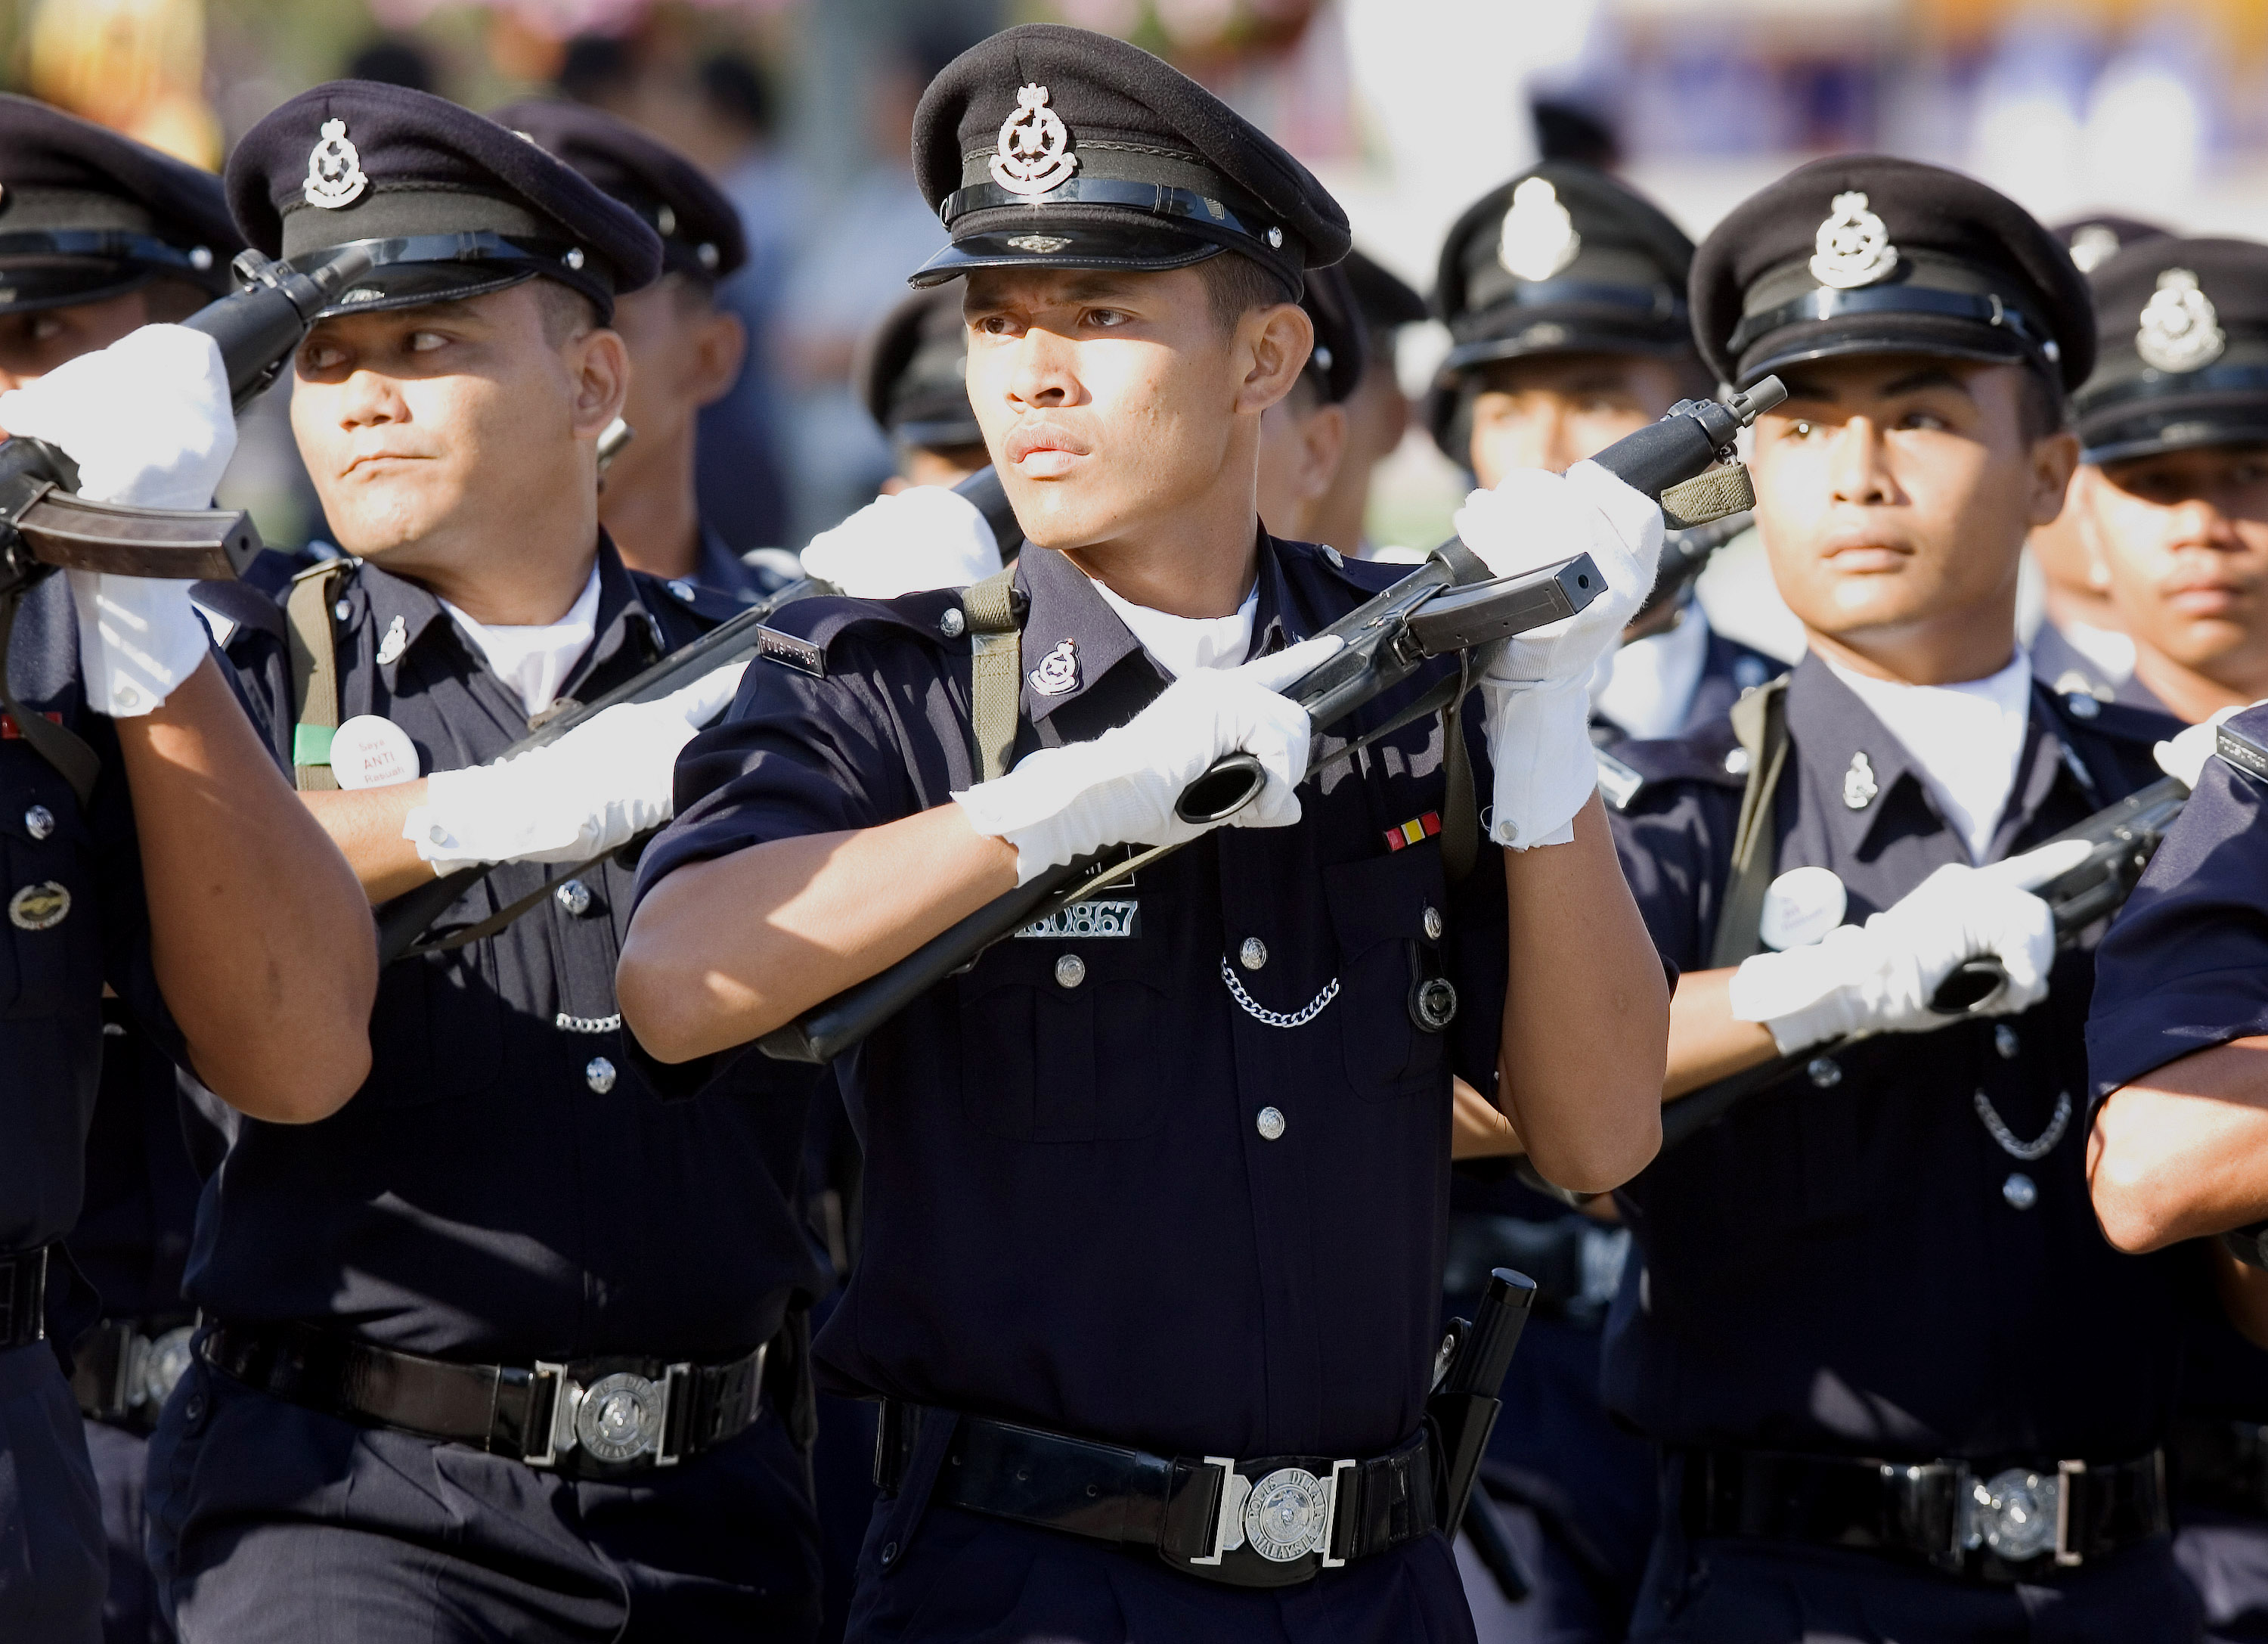 Pleasing the policeman. Японская полиция. Японская Полицейская форма. Форма полиции Японии. Полицейские в Японии.